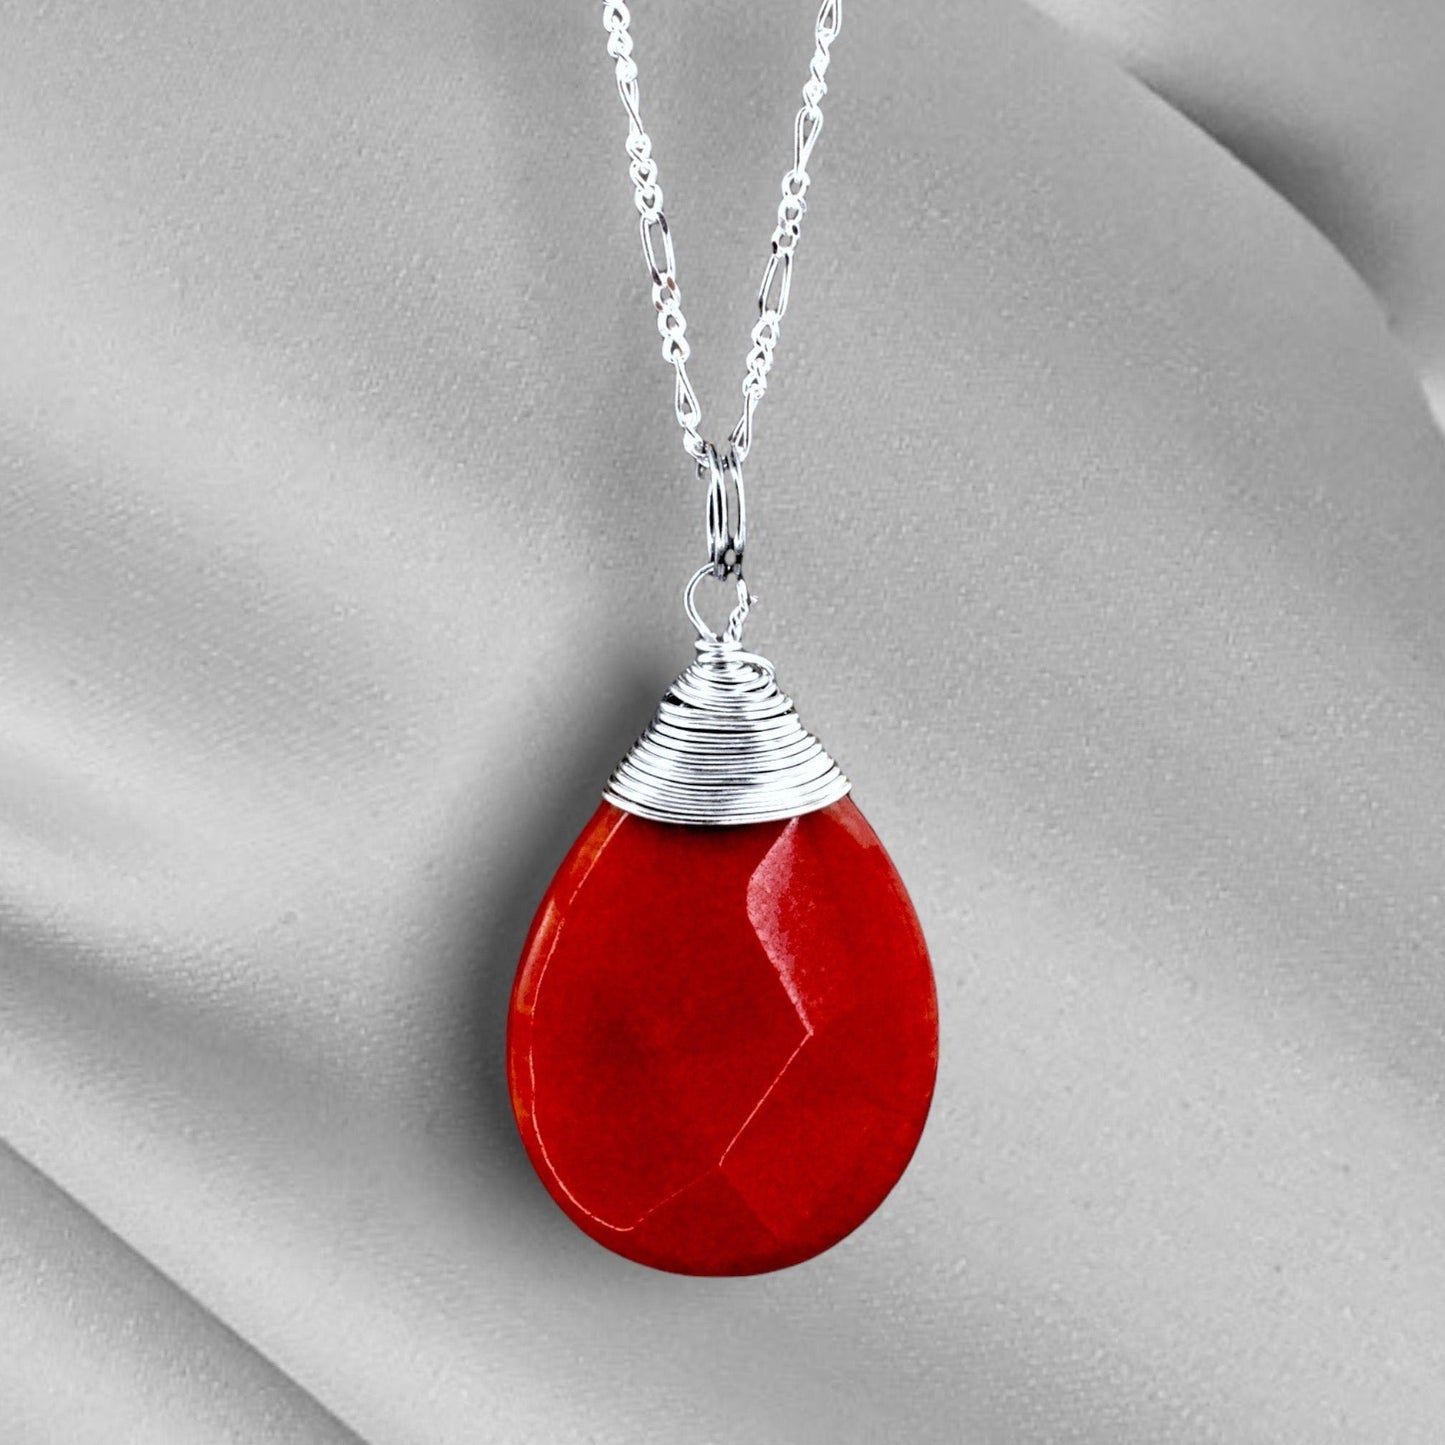 Jade Drop Silver Chain - Collier de joyau rouge en cristal de grenades Sterling 925 - K925-42